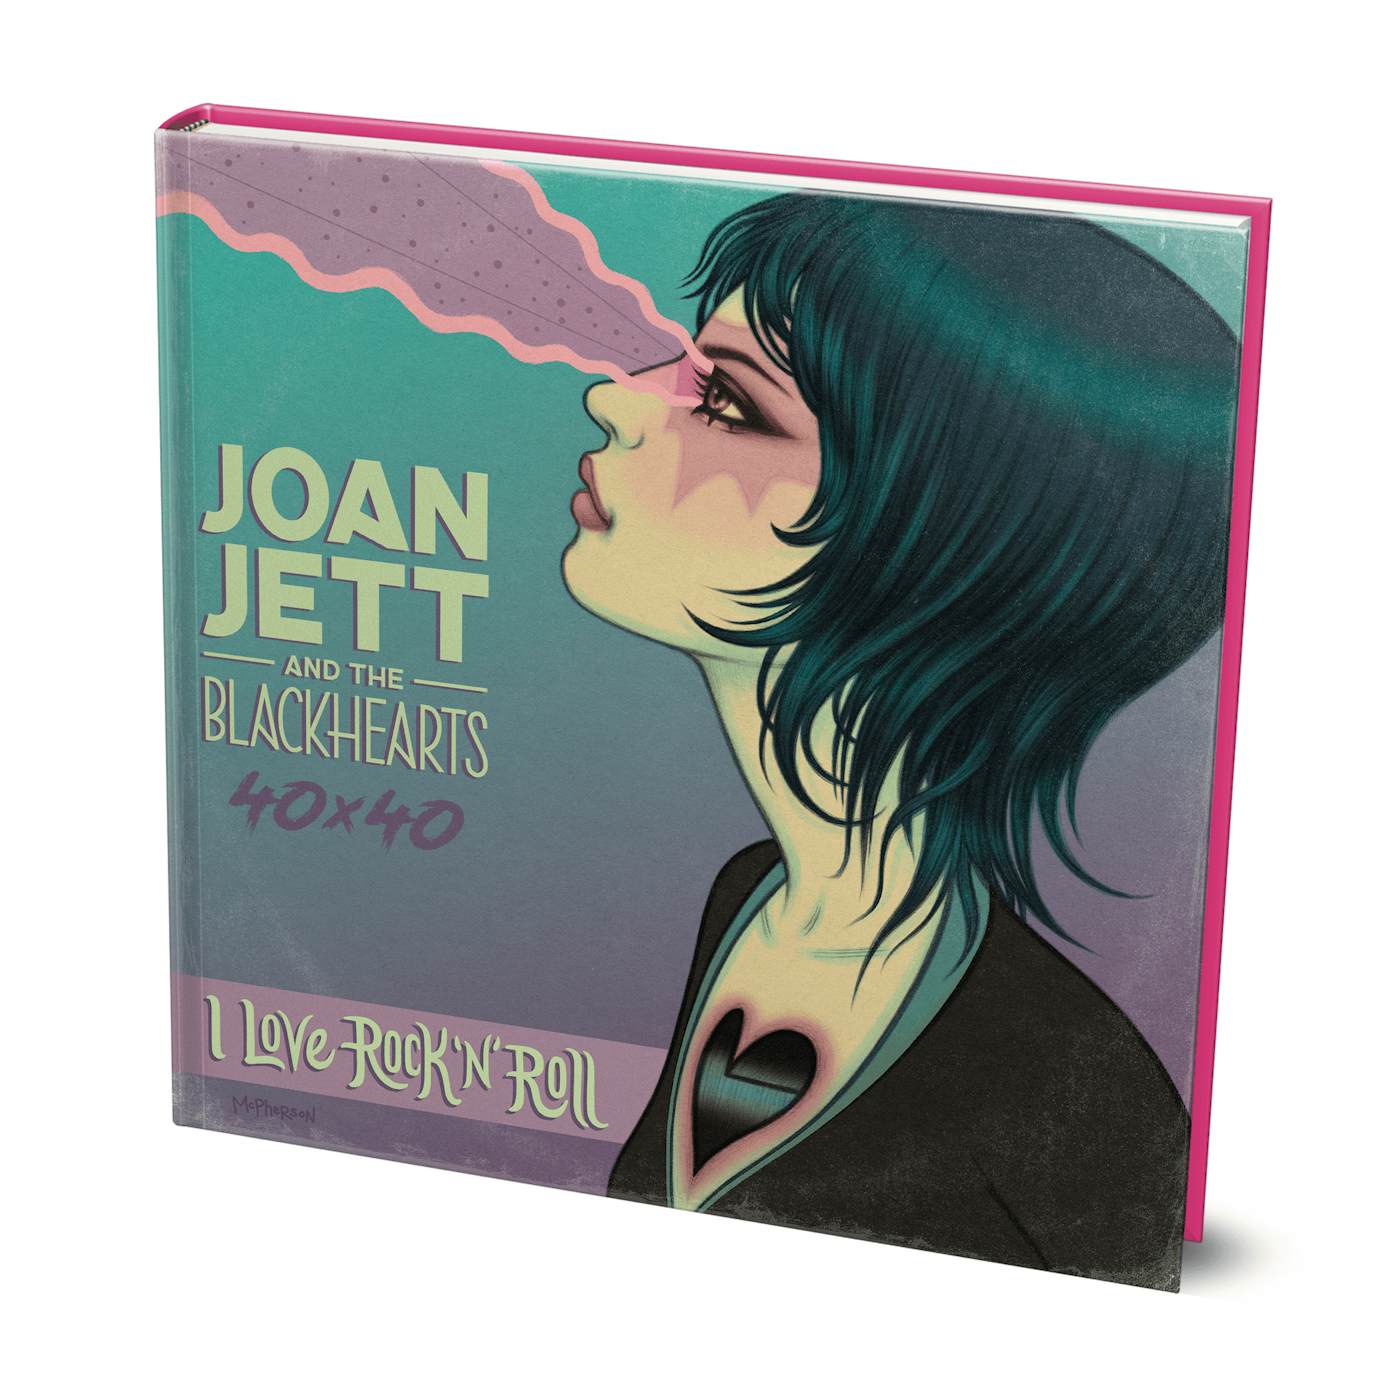 JOAN JETT & THE BLACKHEARTS - 40x40: Bad Reputation/I Love Rock 'n' Roll - Deluxe Book